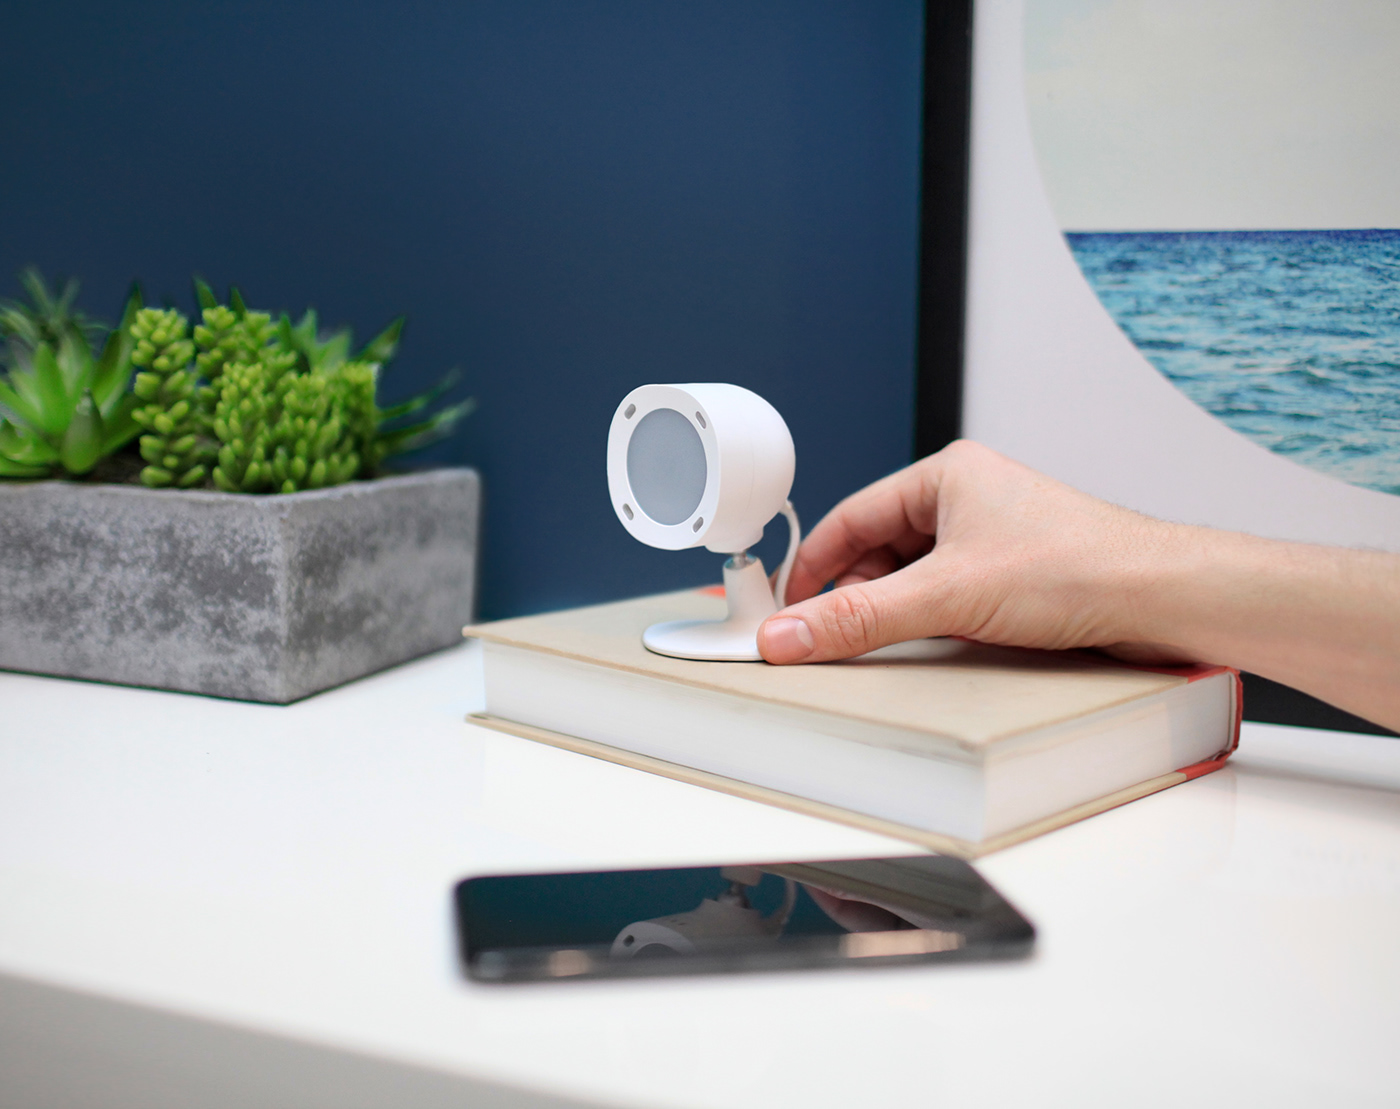 camera privacy tech home device Smart glass shield compact minimal